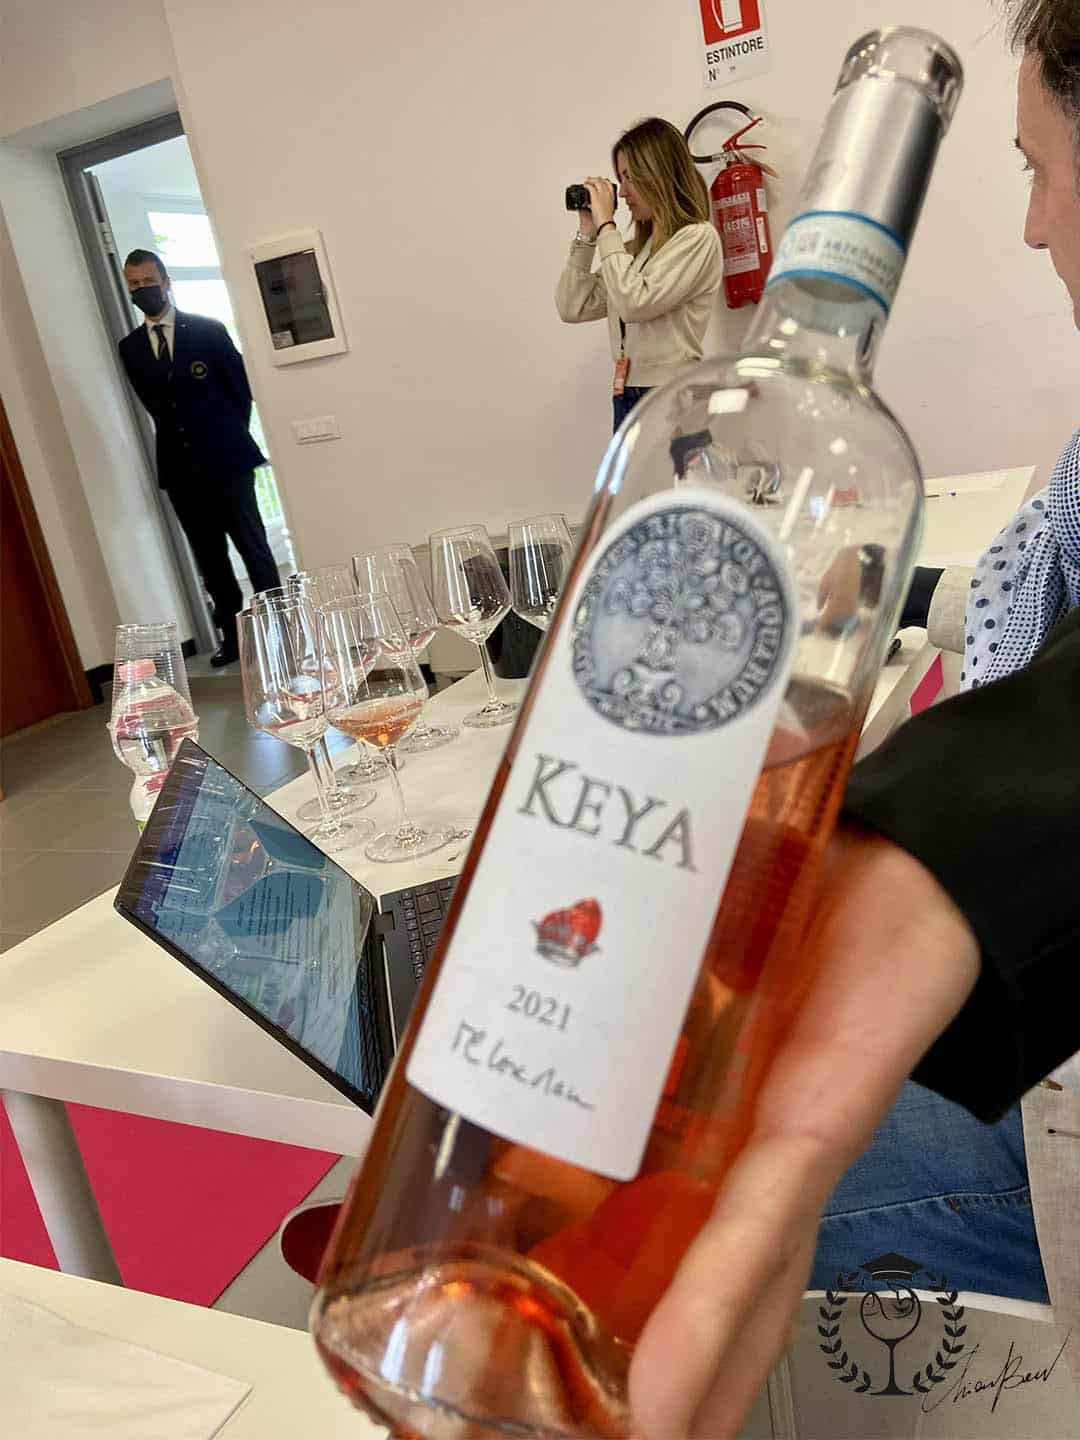 Keya claret rosé wine